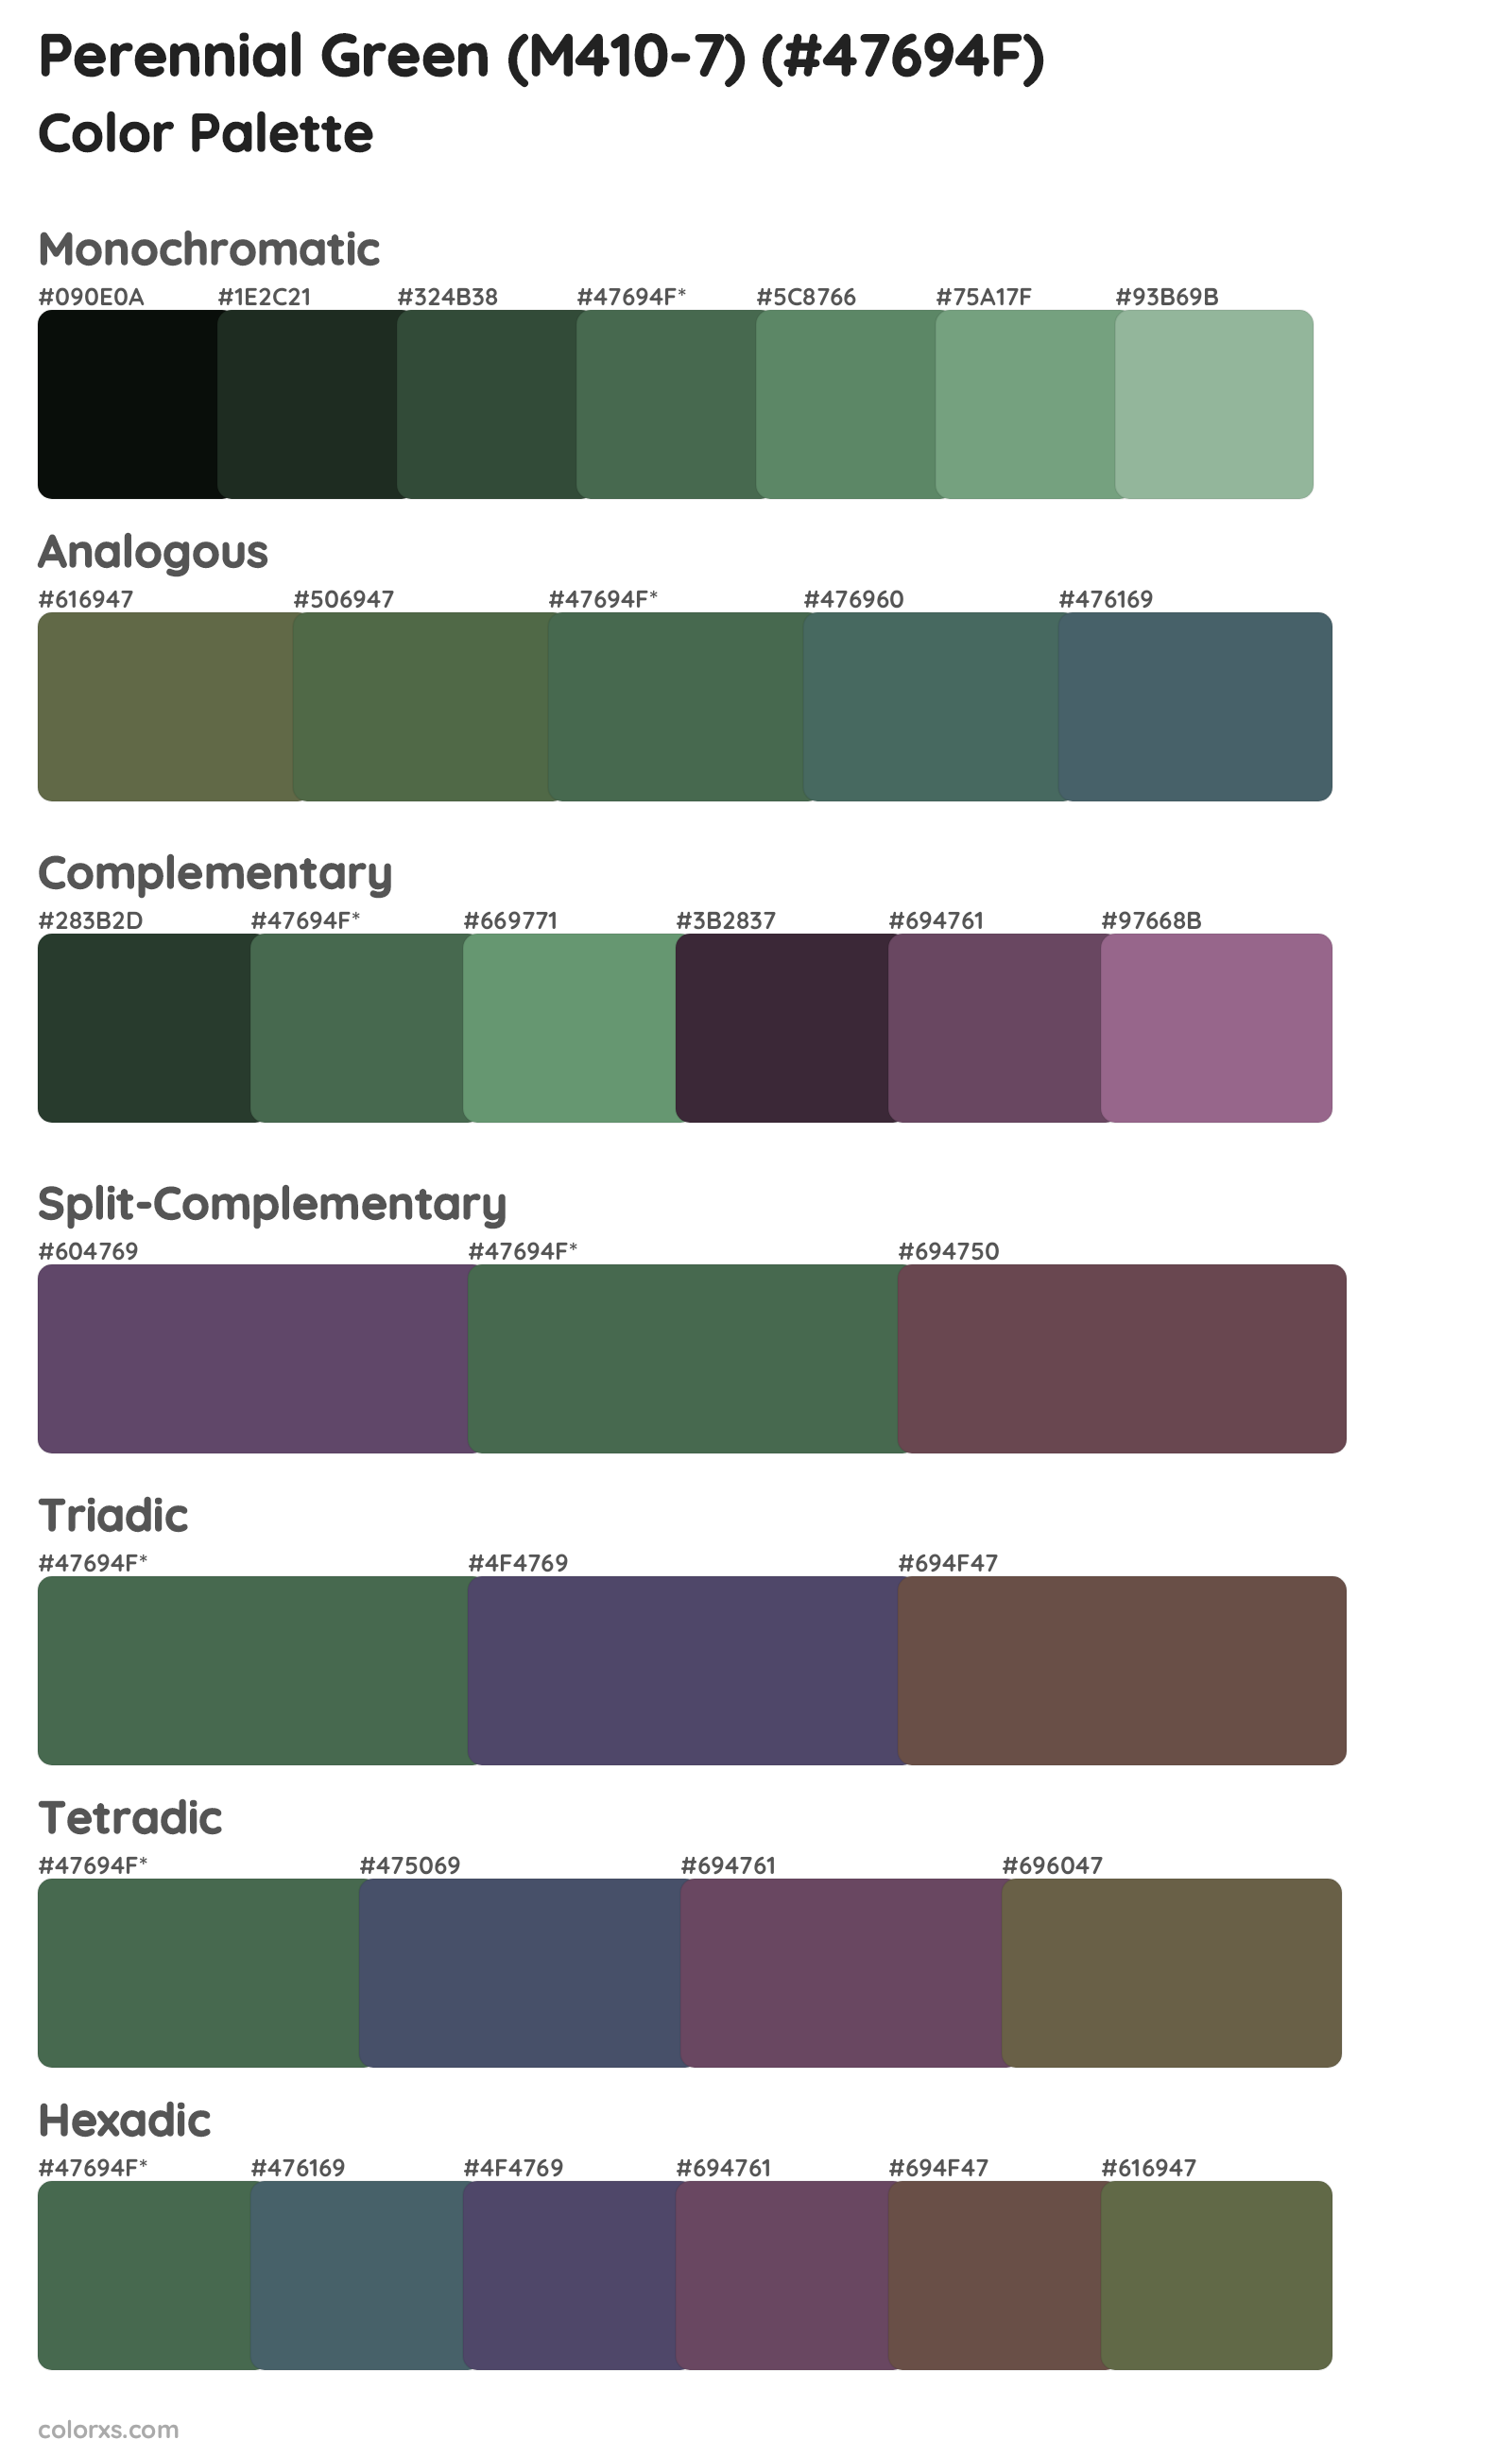 Perennial Green (M410-7) Color Scheme Palettes